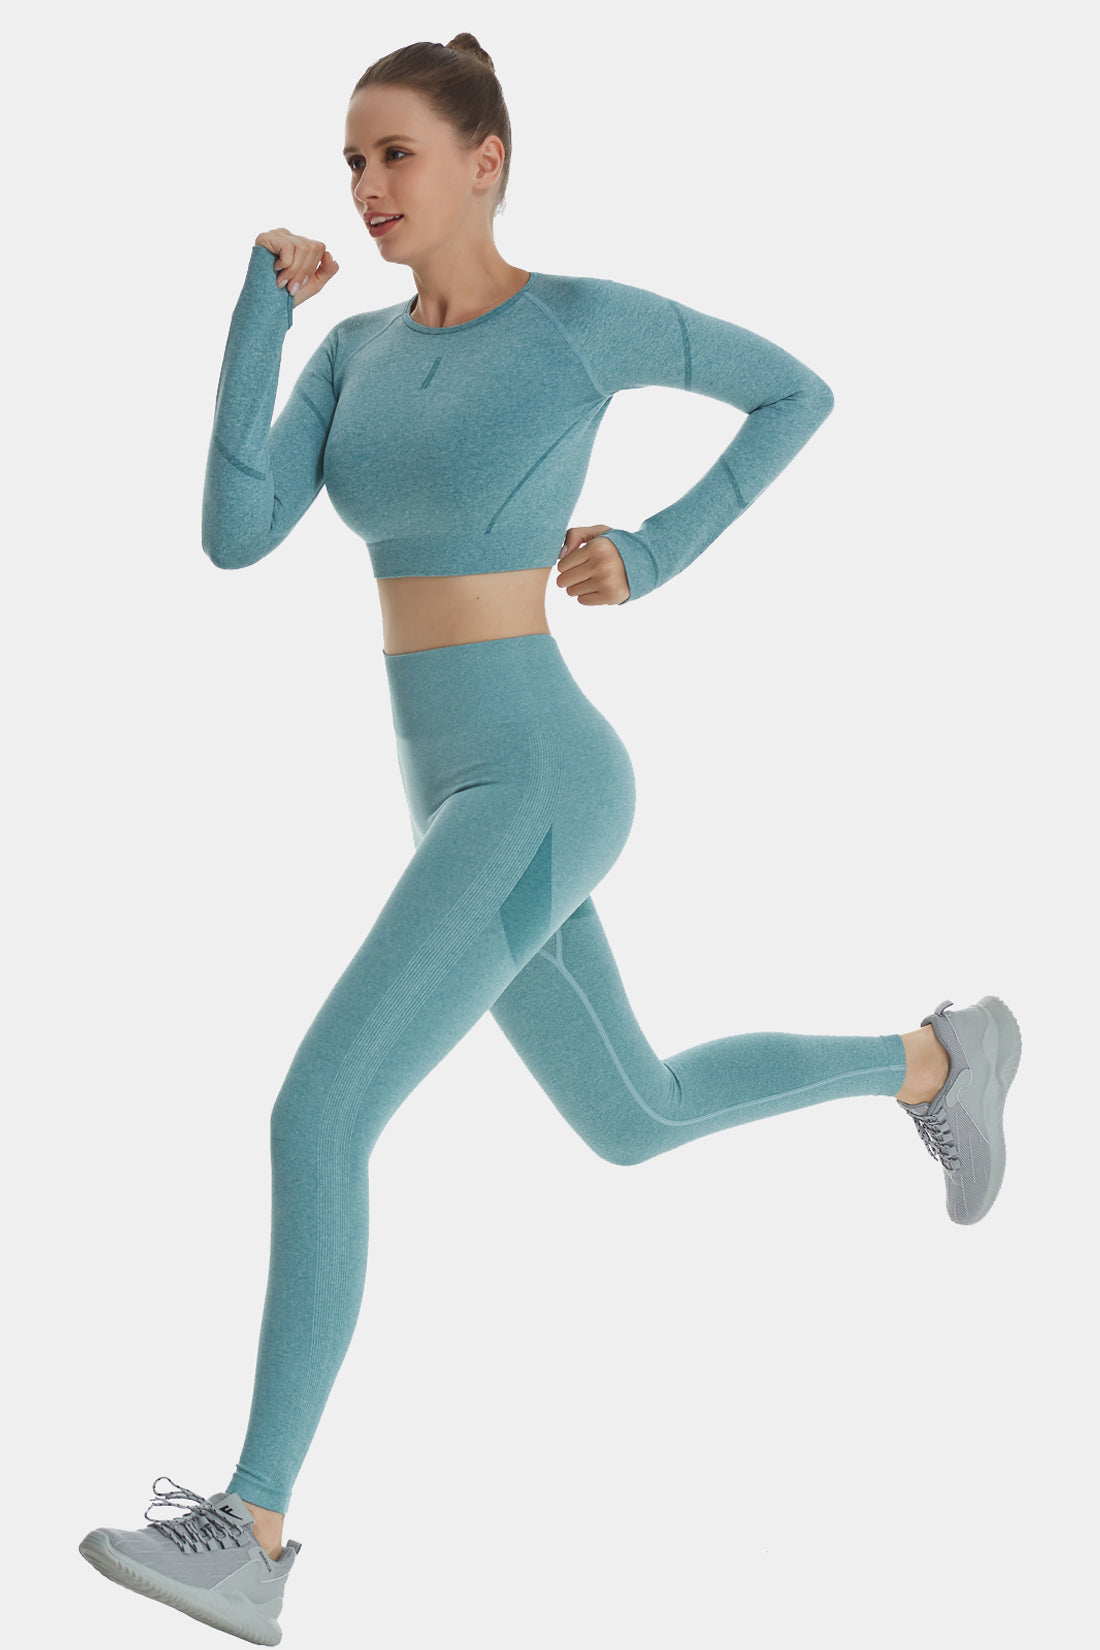 Women Seamless 2pcs Yoga Set Yoga Suit Crop Top+Leggings Pants Sports Gym  Outfit